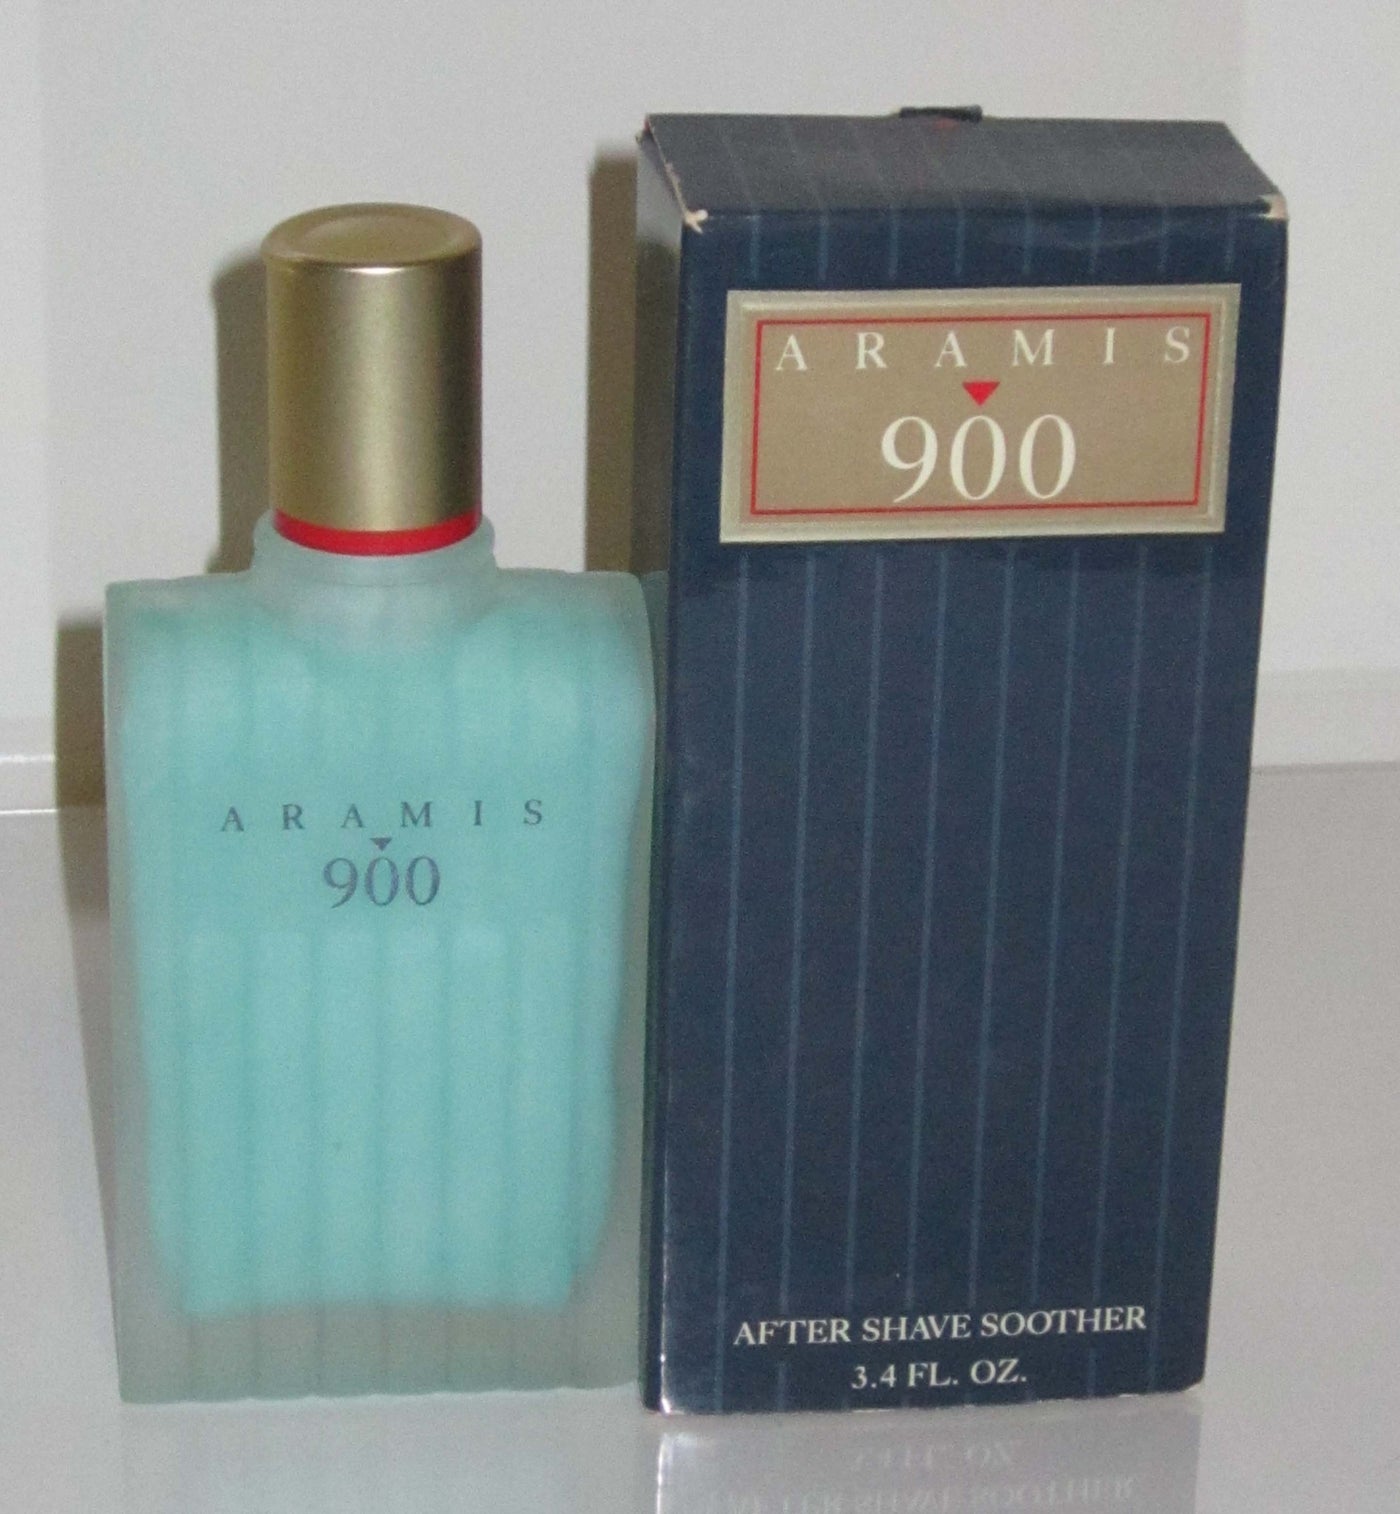 Vintage Aramis 900 After Shave Soother